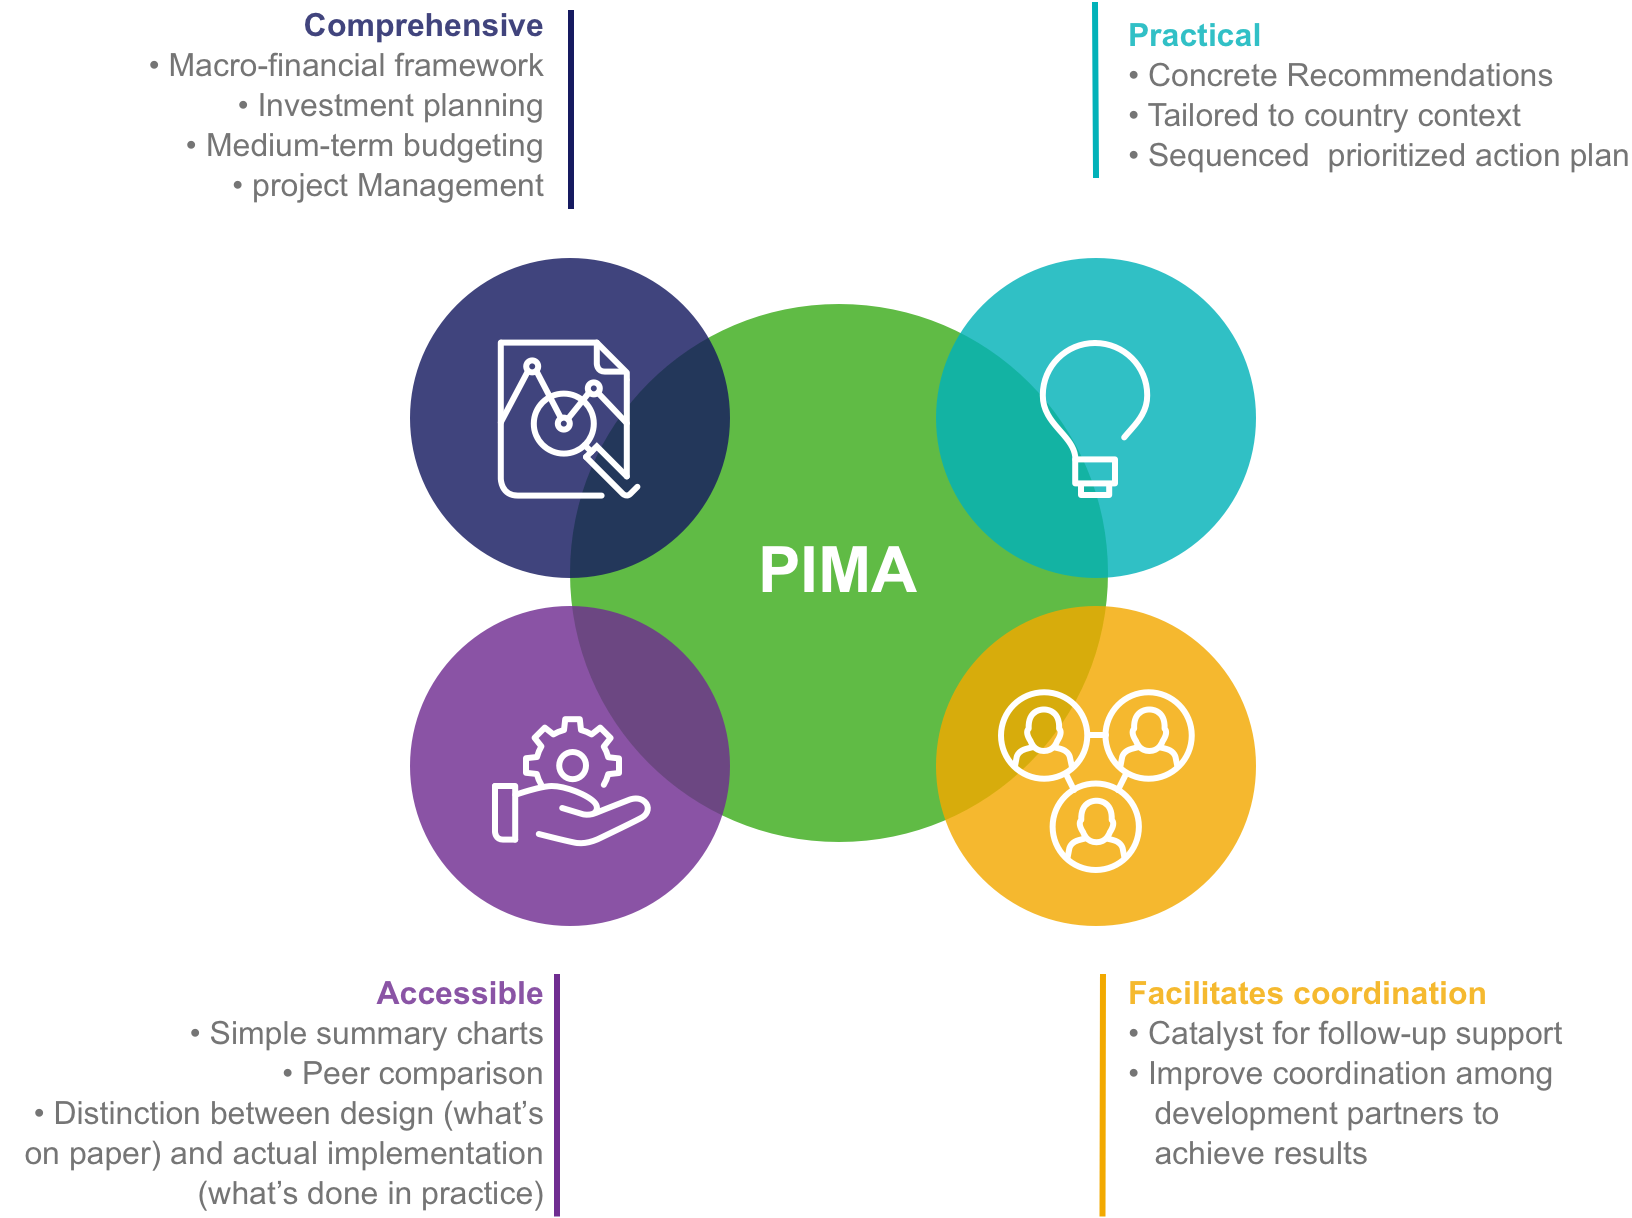 Benefits of PIMA